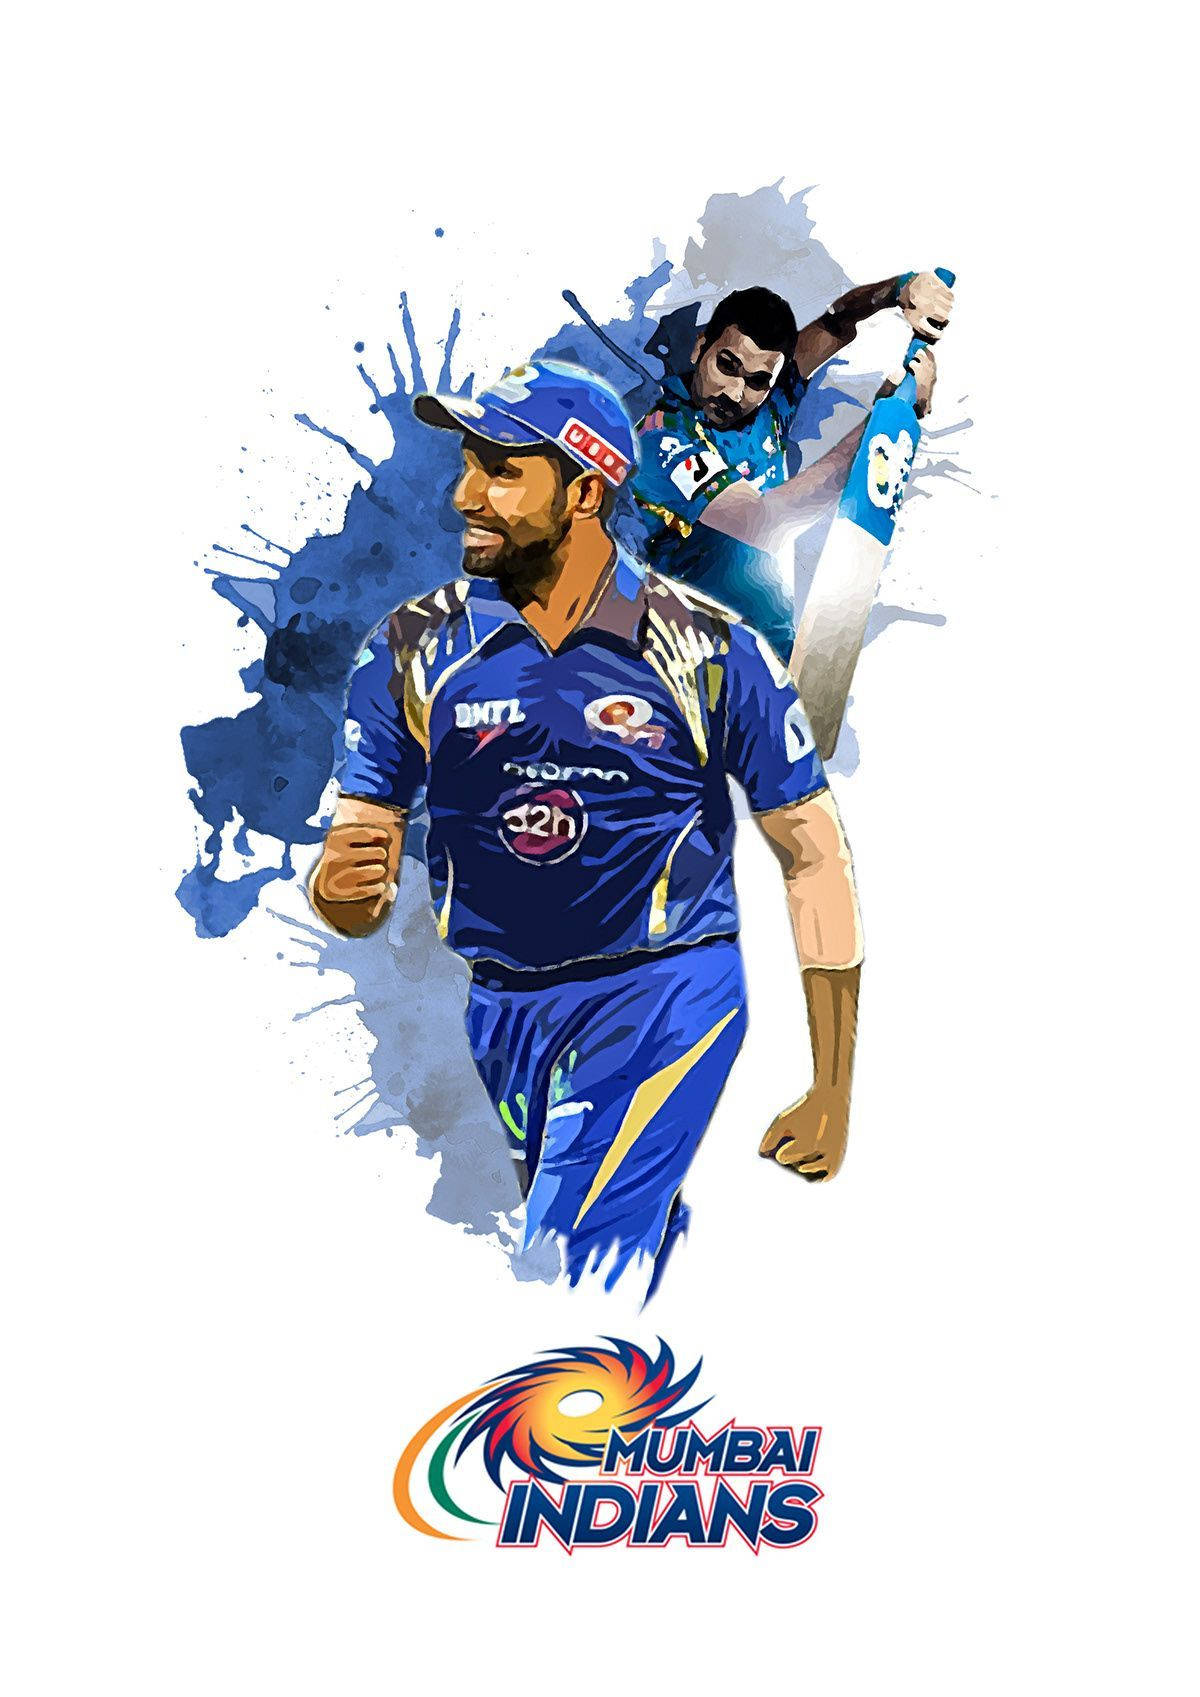 Mumbai Indians Player Rohit Sharma Poster Wallpaper